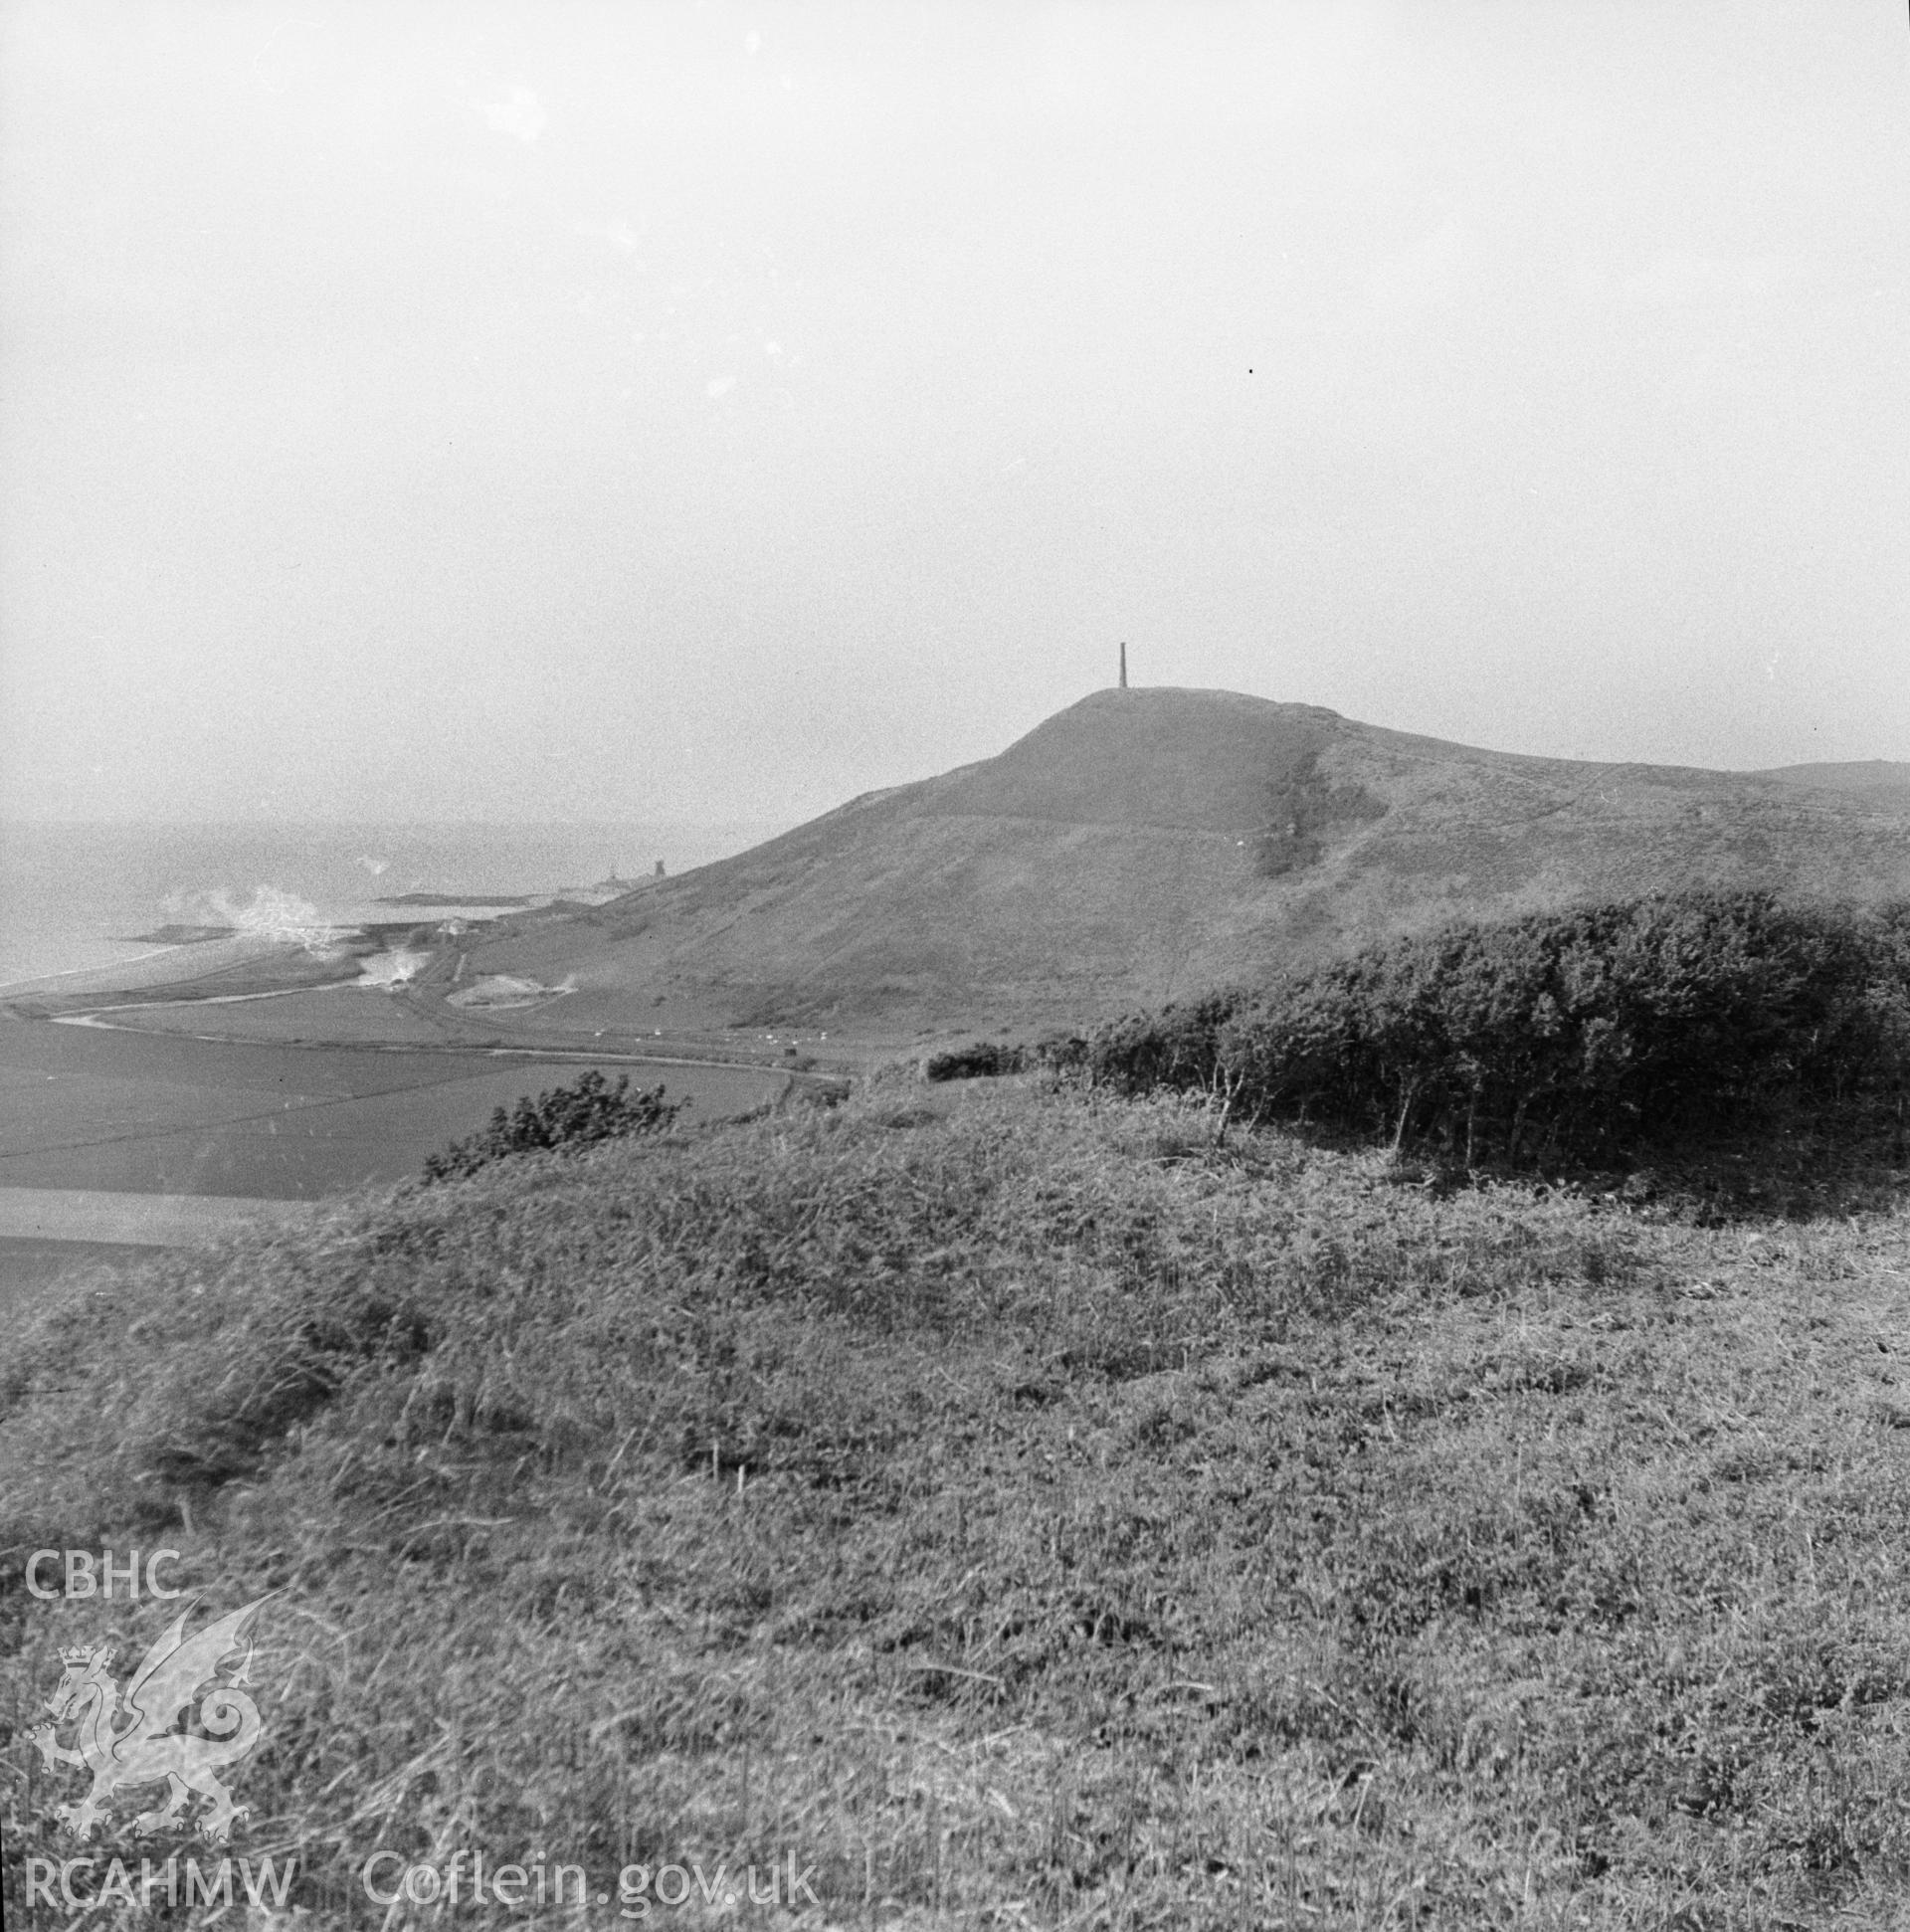 General view looking towards Pen Dinas.